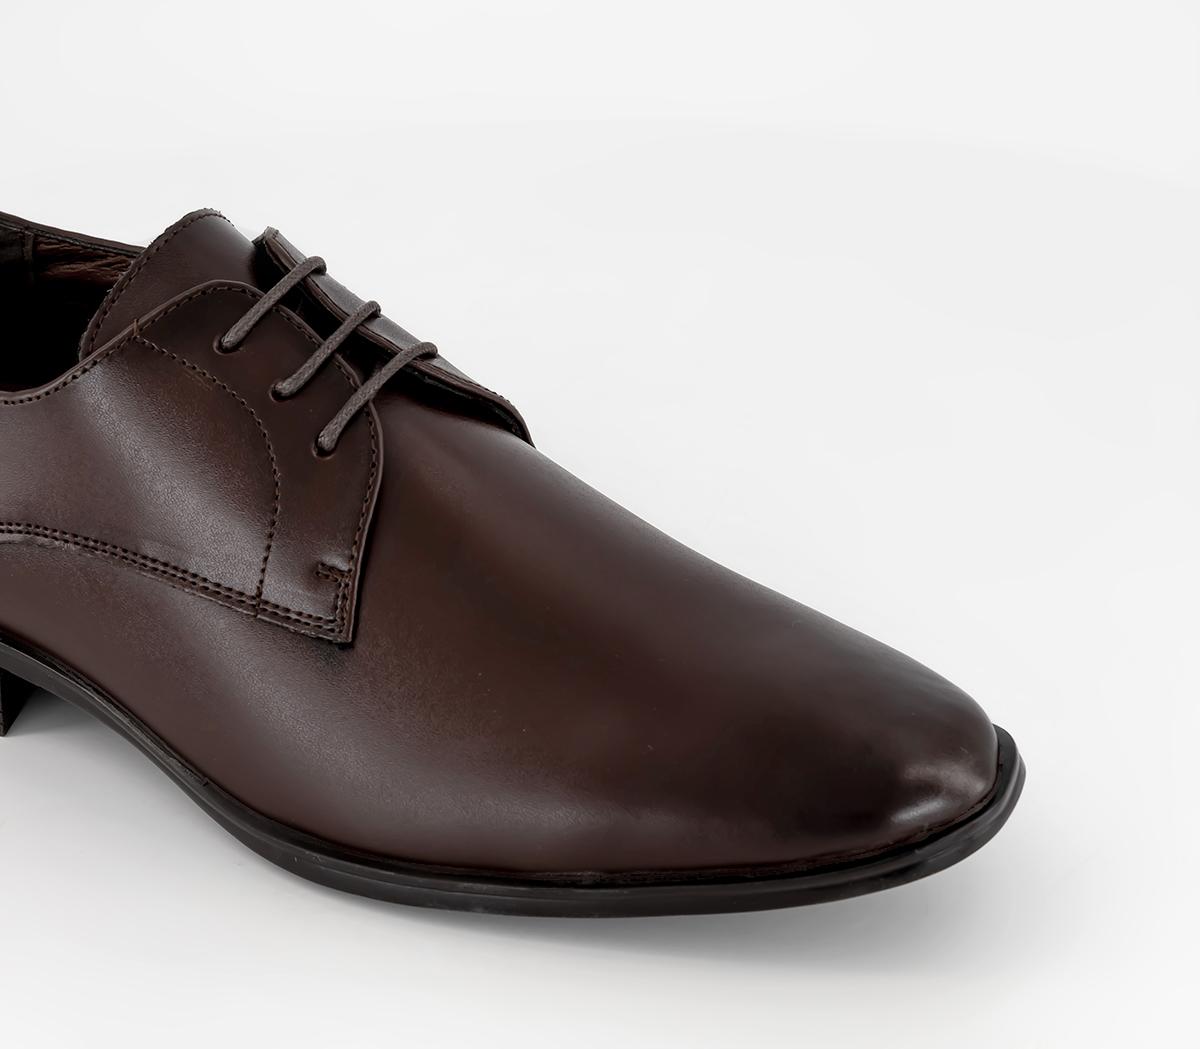 OFFICE Micro 2 Plain Derby Shoes Brown Leather - Men’s Smart Shoes